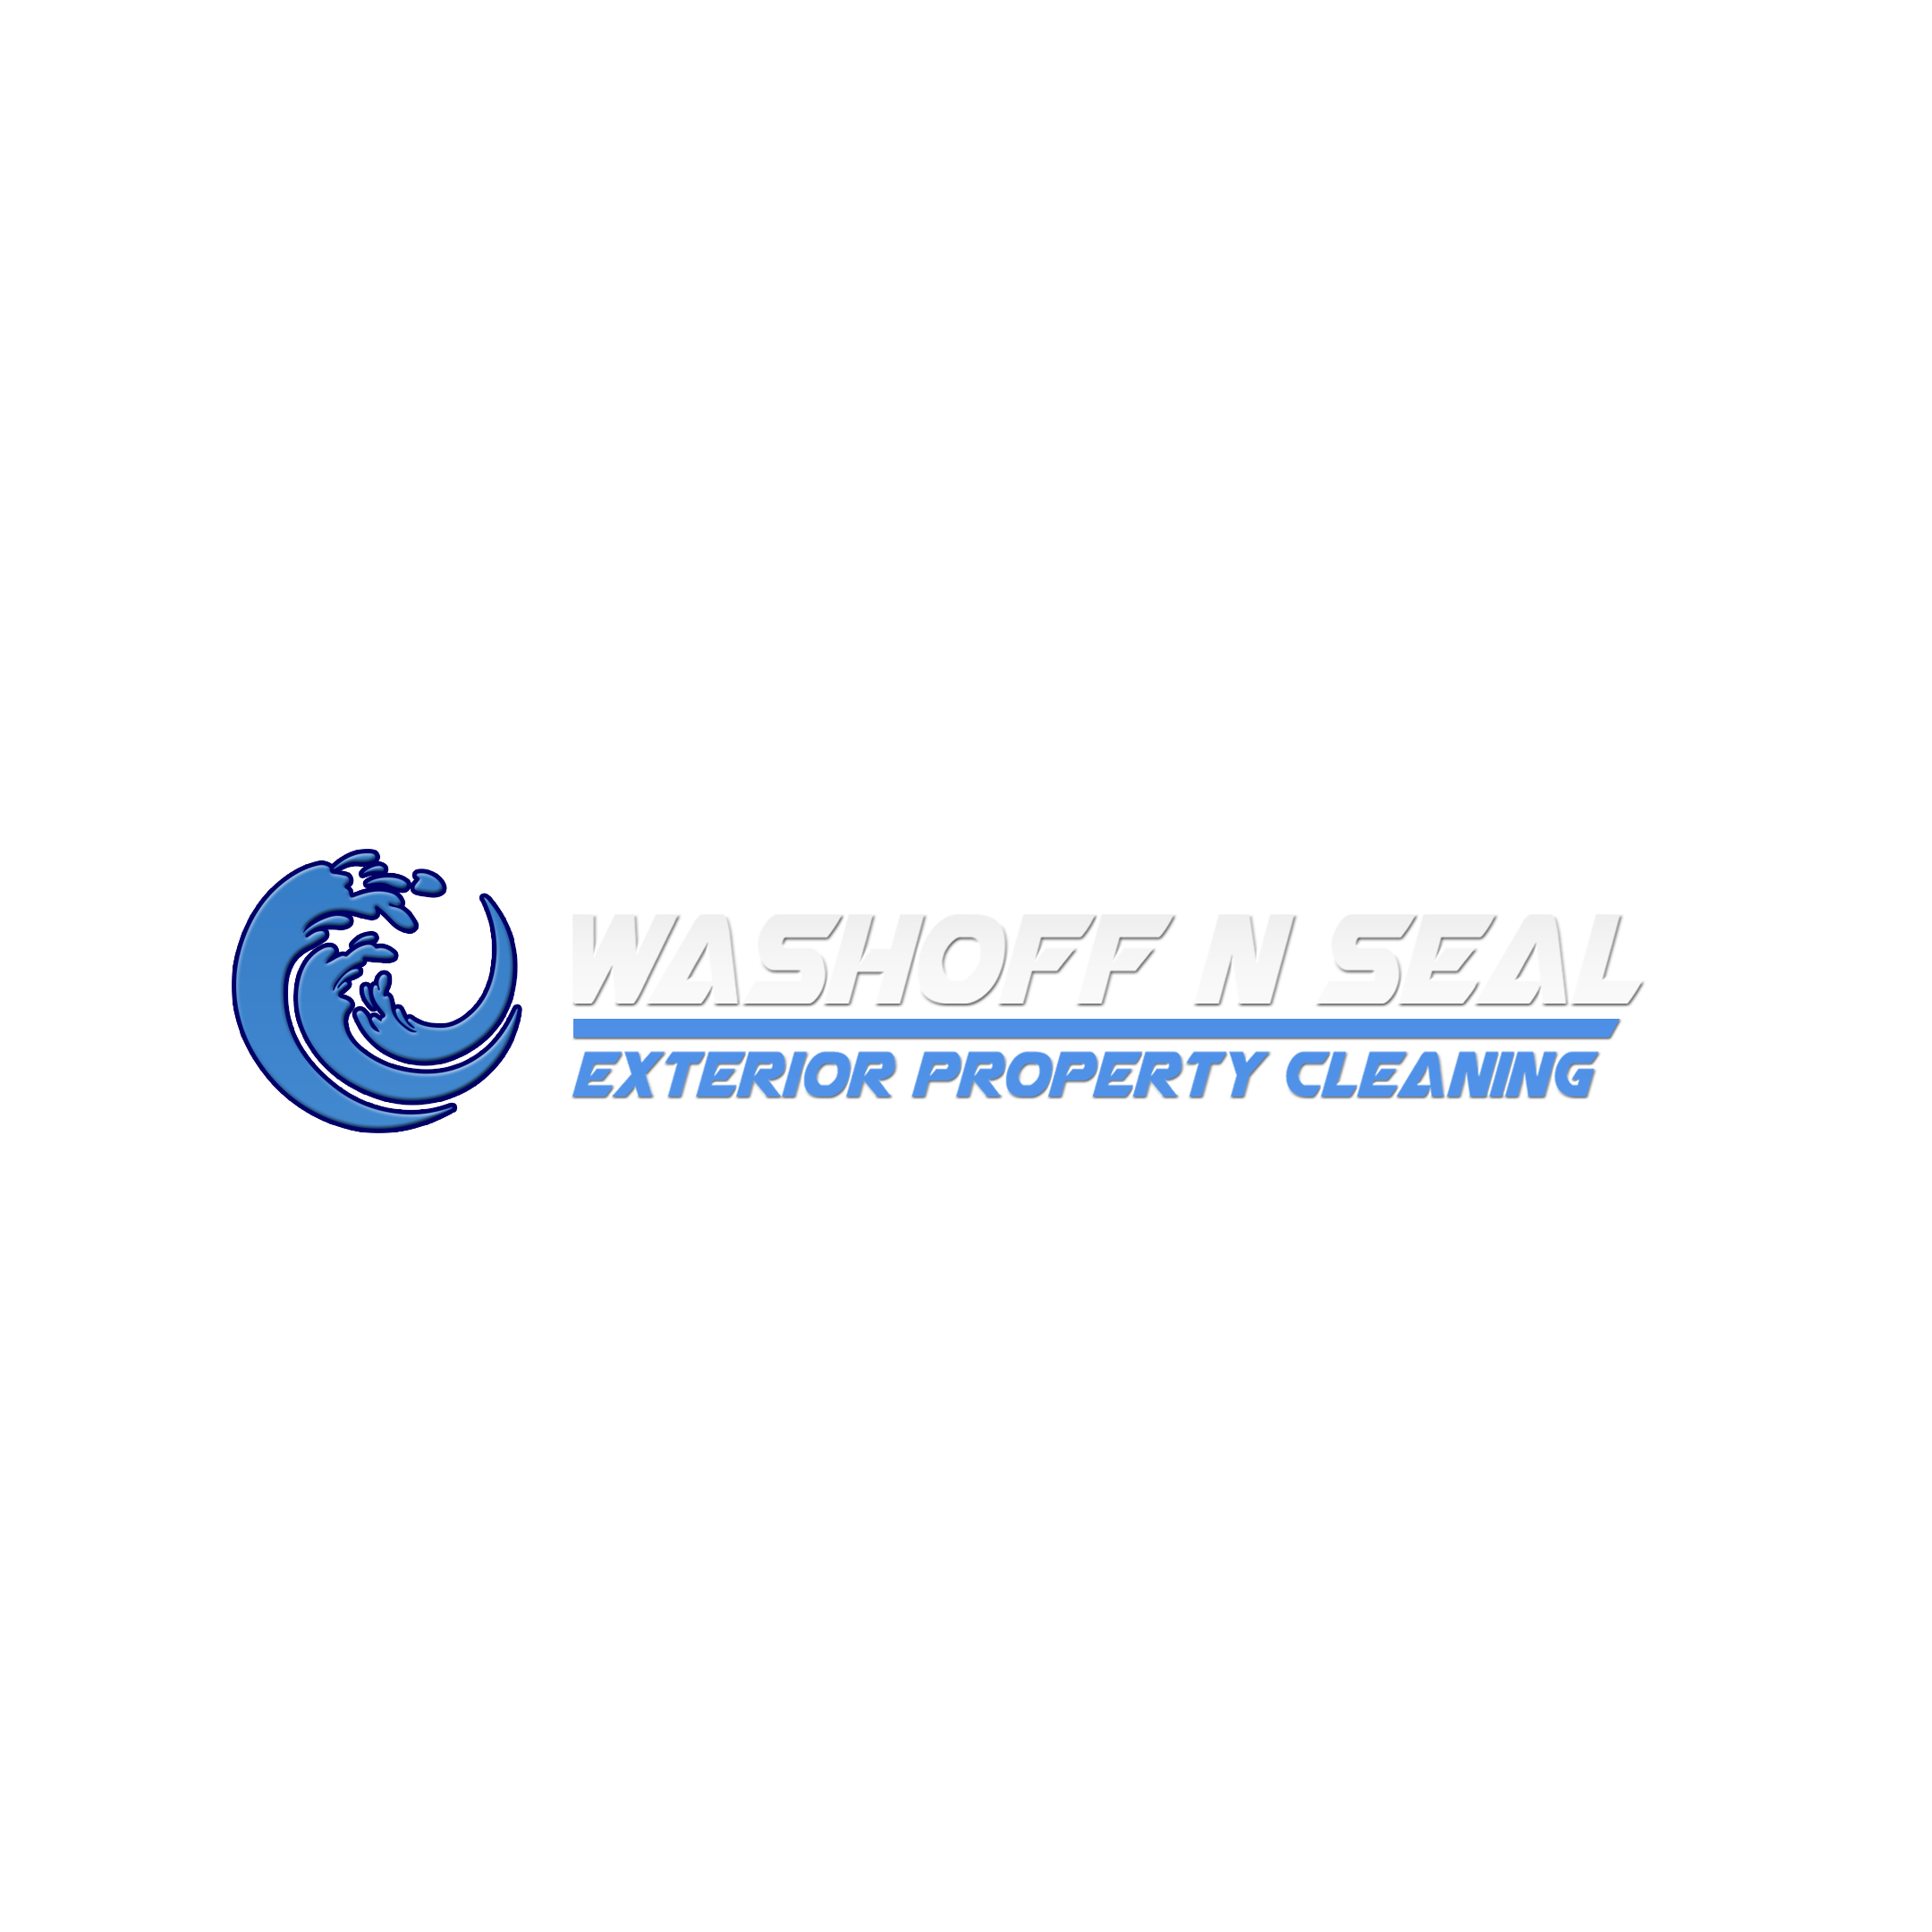 Washoff N Seal Logo